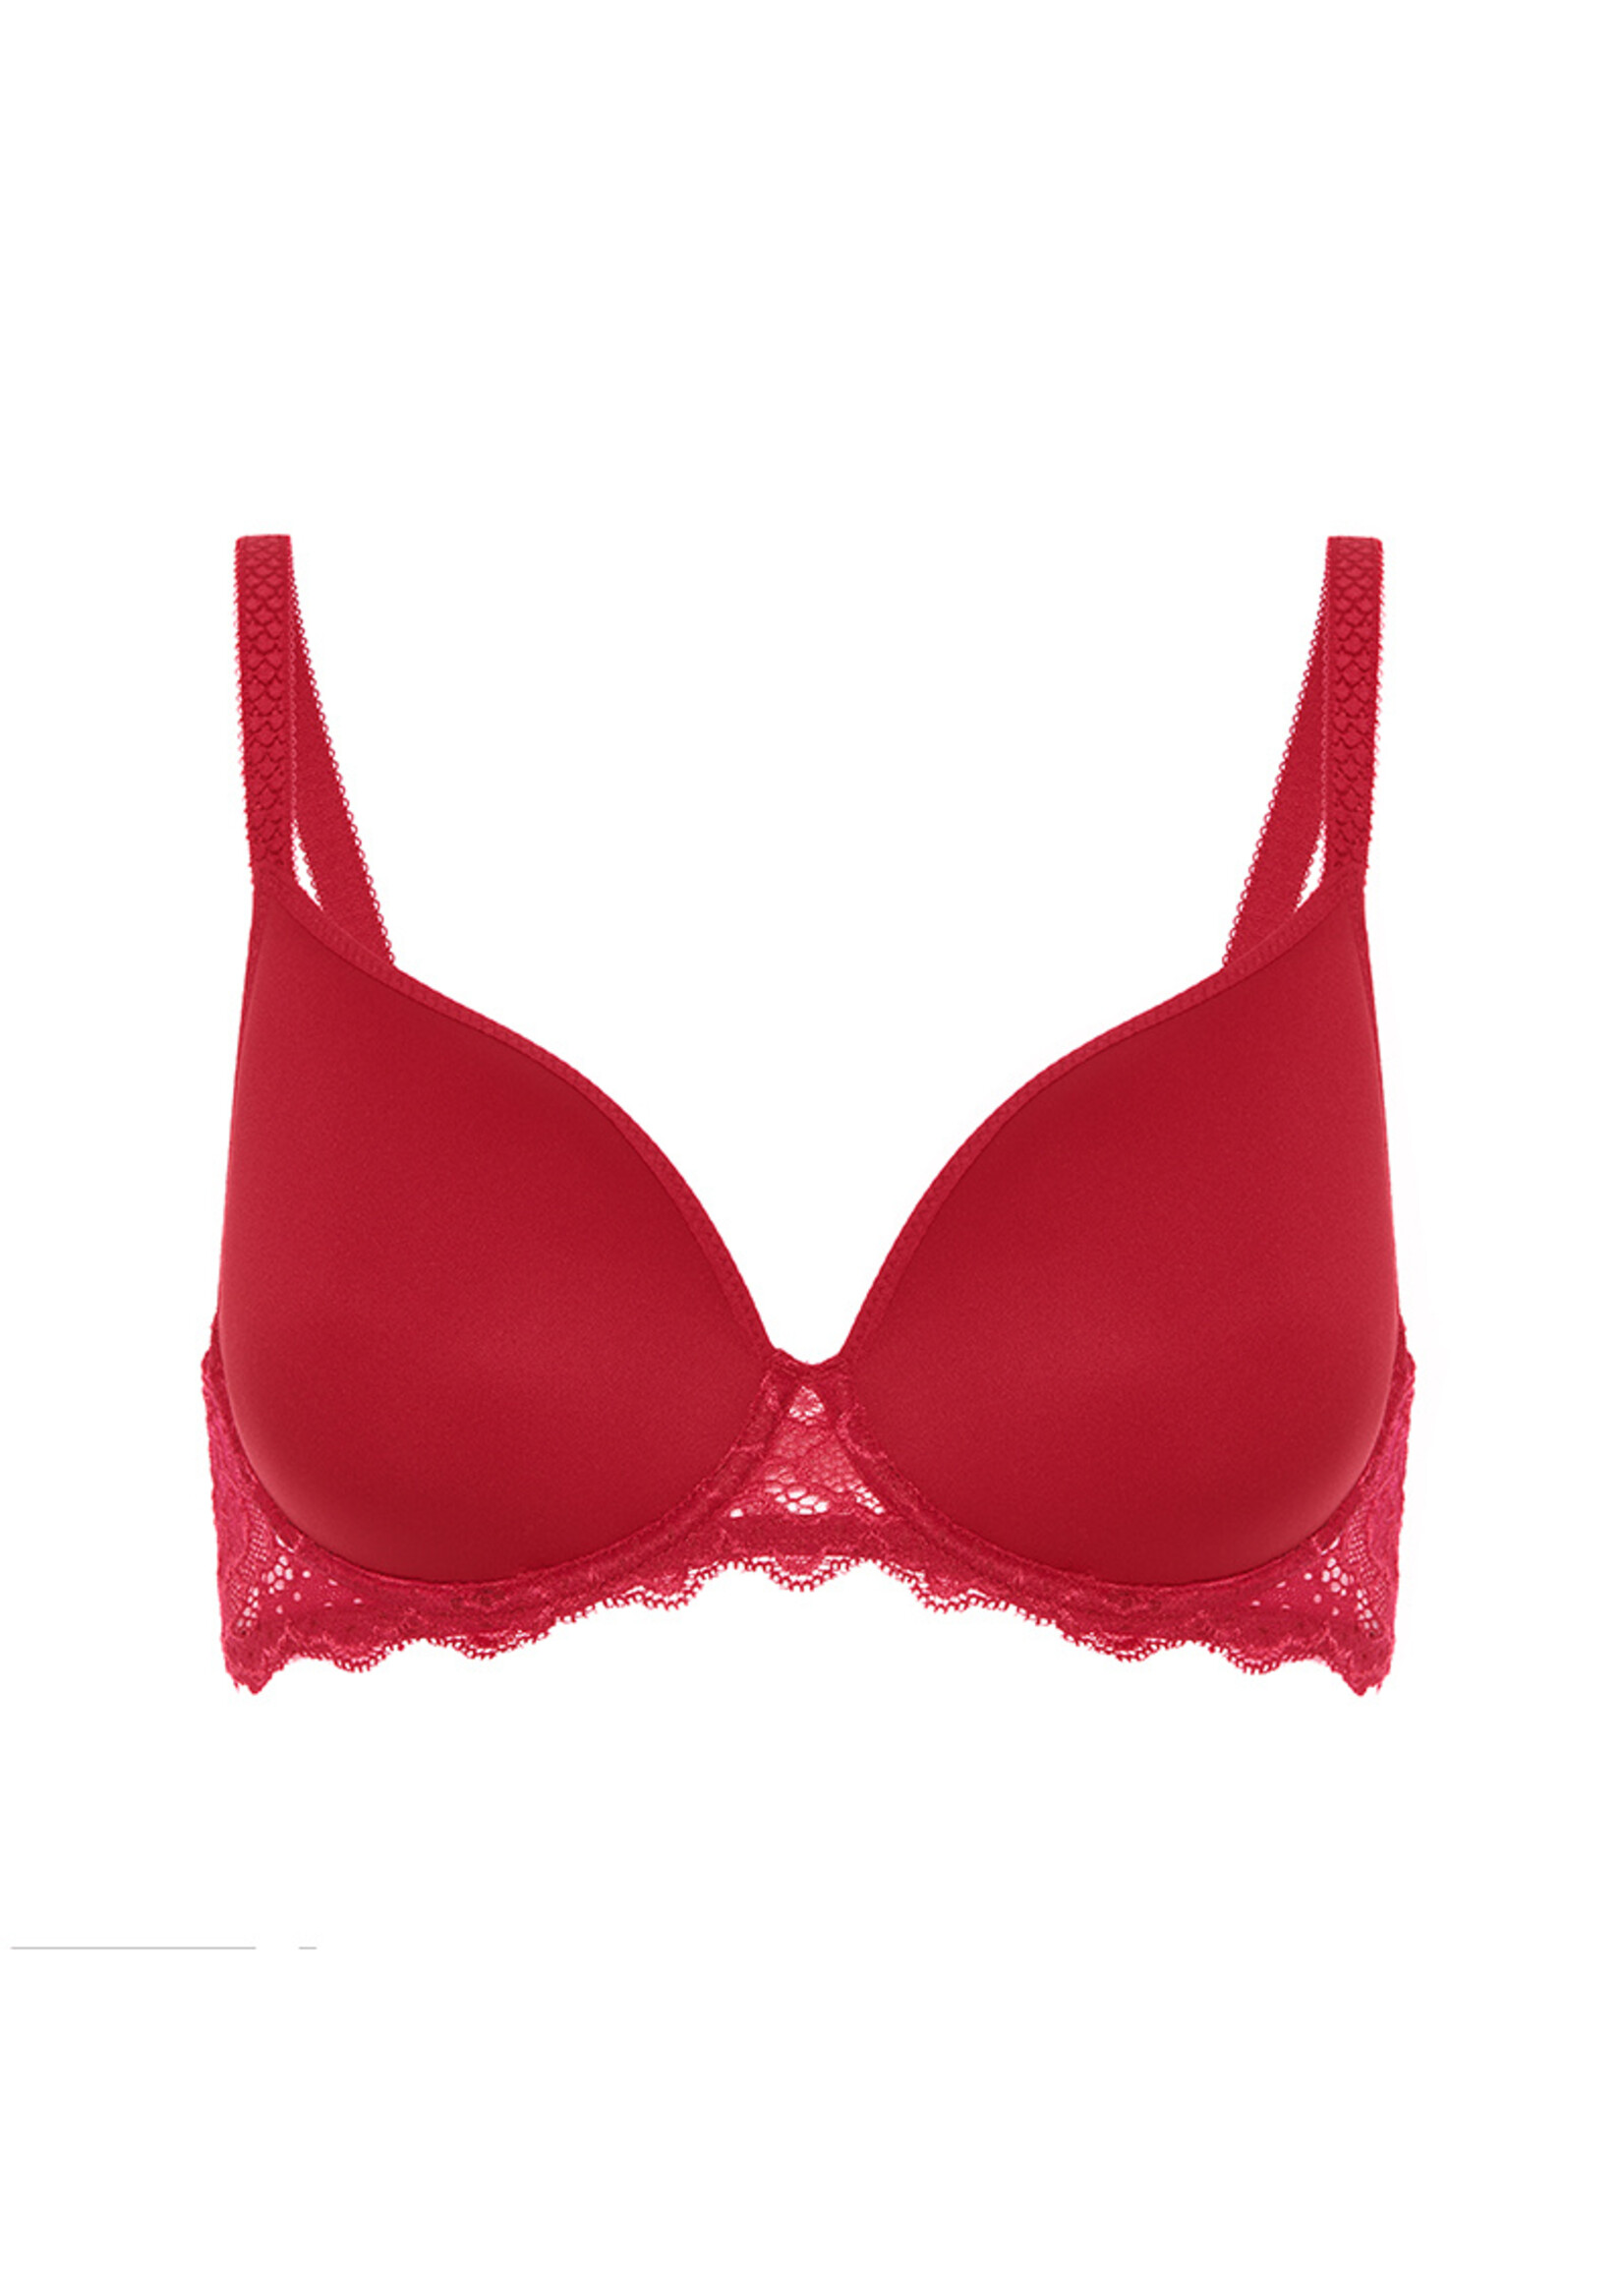 Elegant Red Lace Push Up Bra - Size 32D